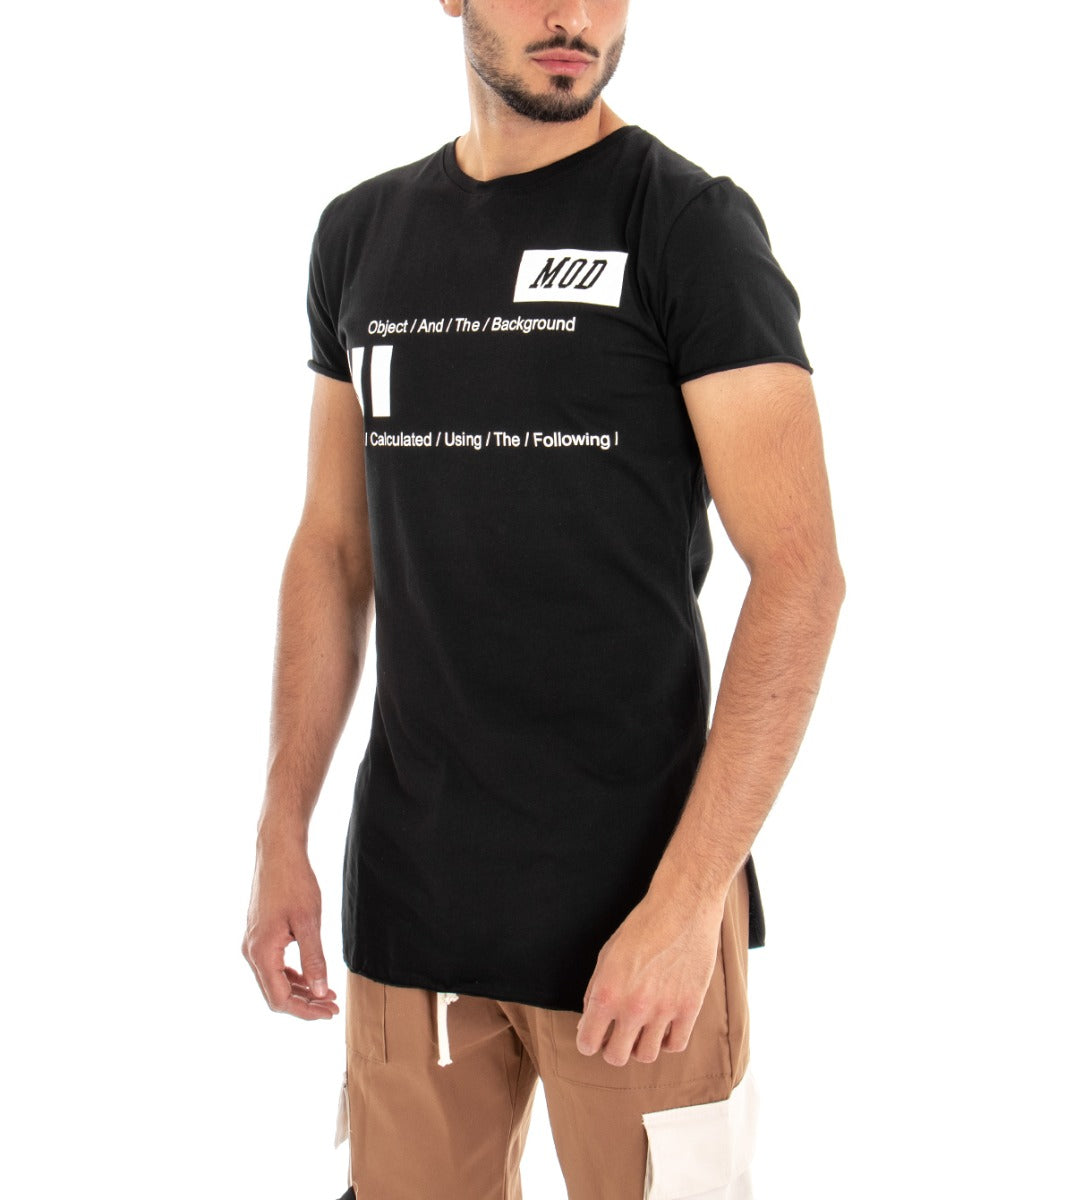 Men's T-shirt Short Sleeve Shirt Written Print Light Cotton Fabric Solid Color Black GIOSAL